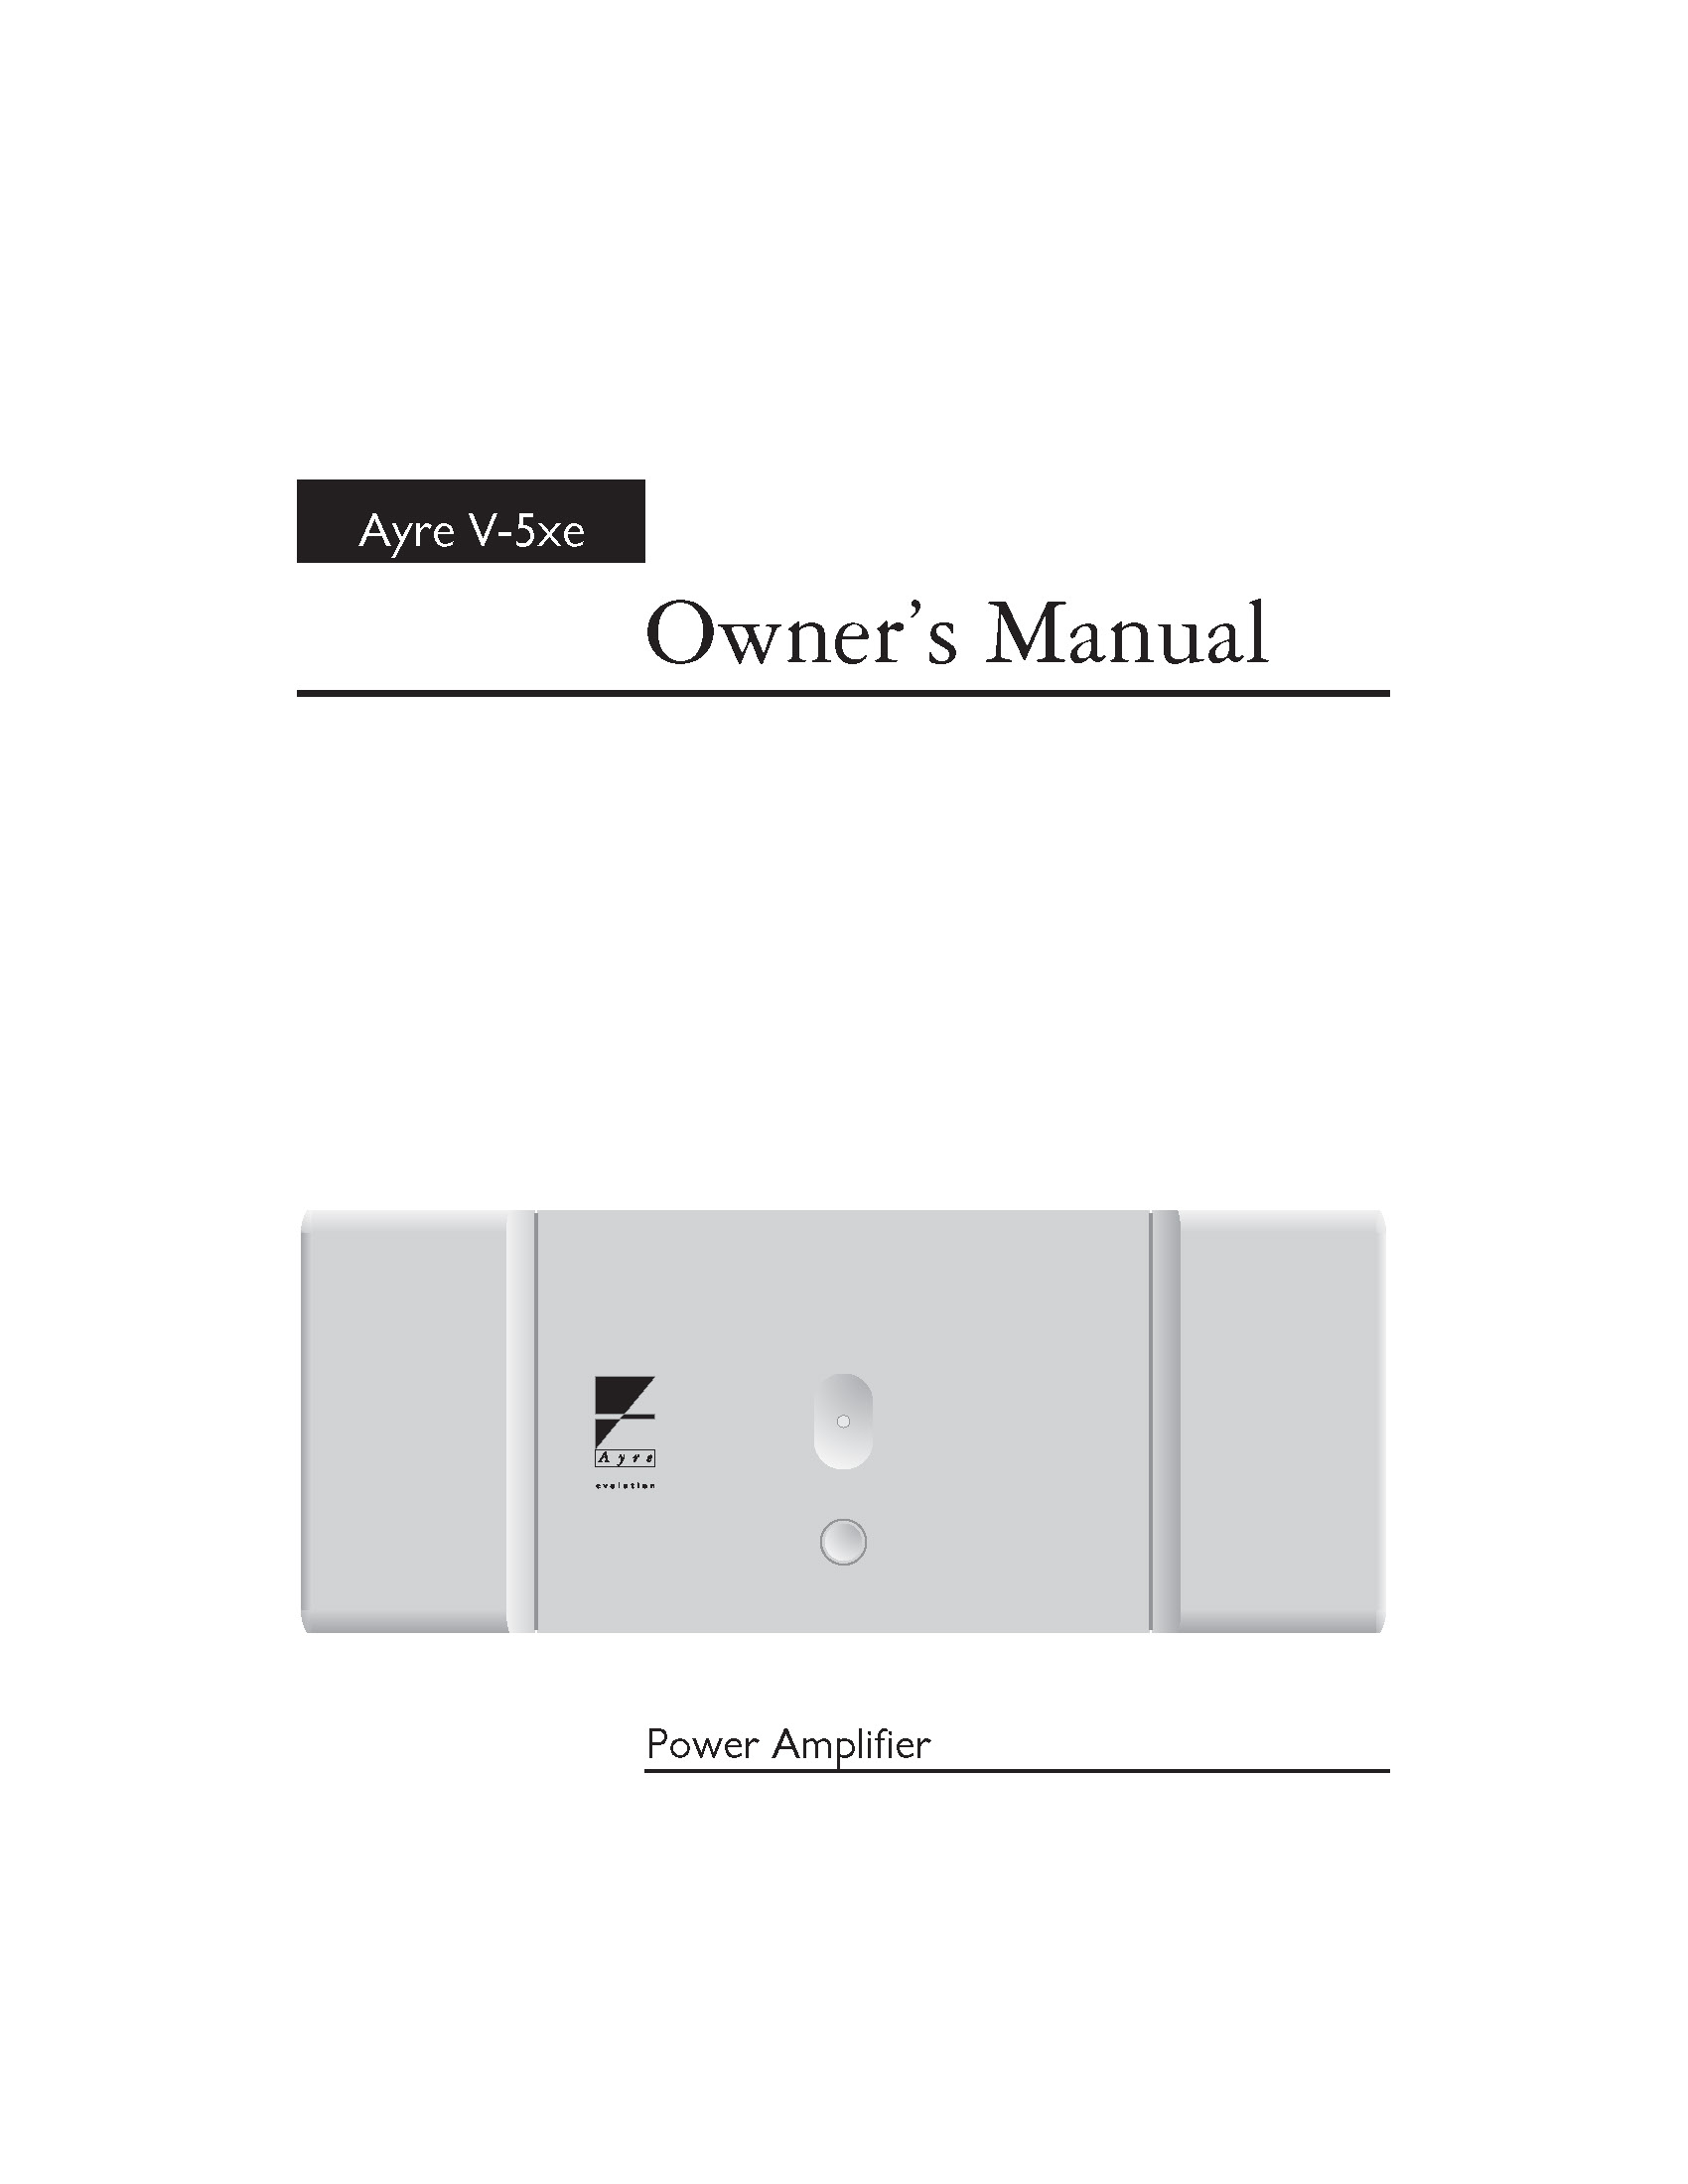 Ayre V-5xe Owner Manual - Norman Audio